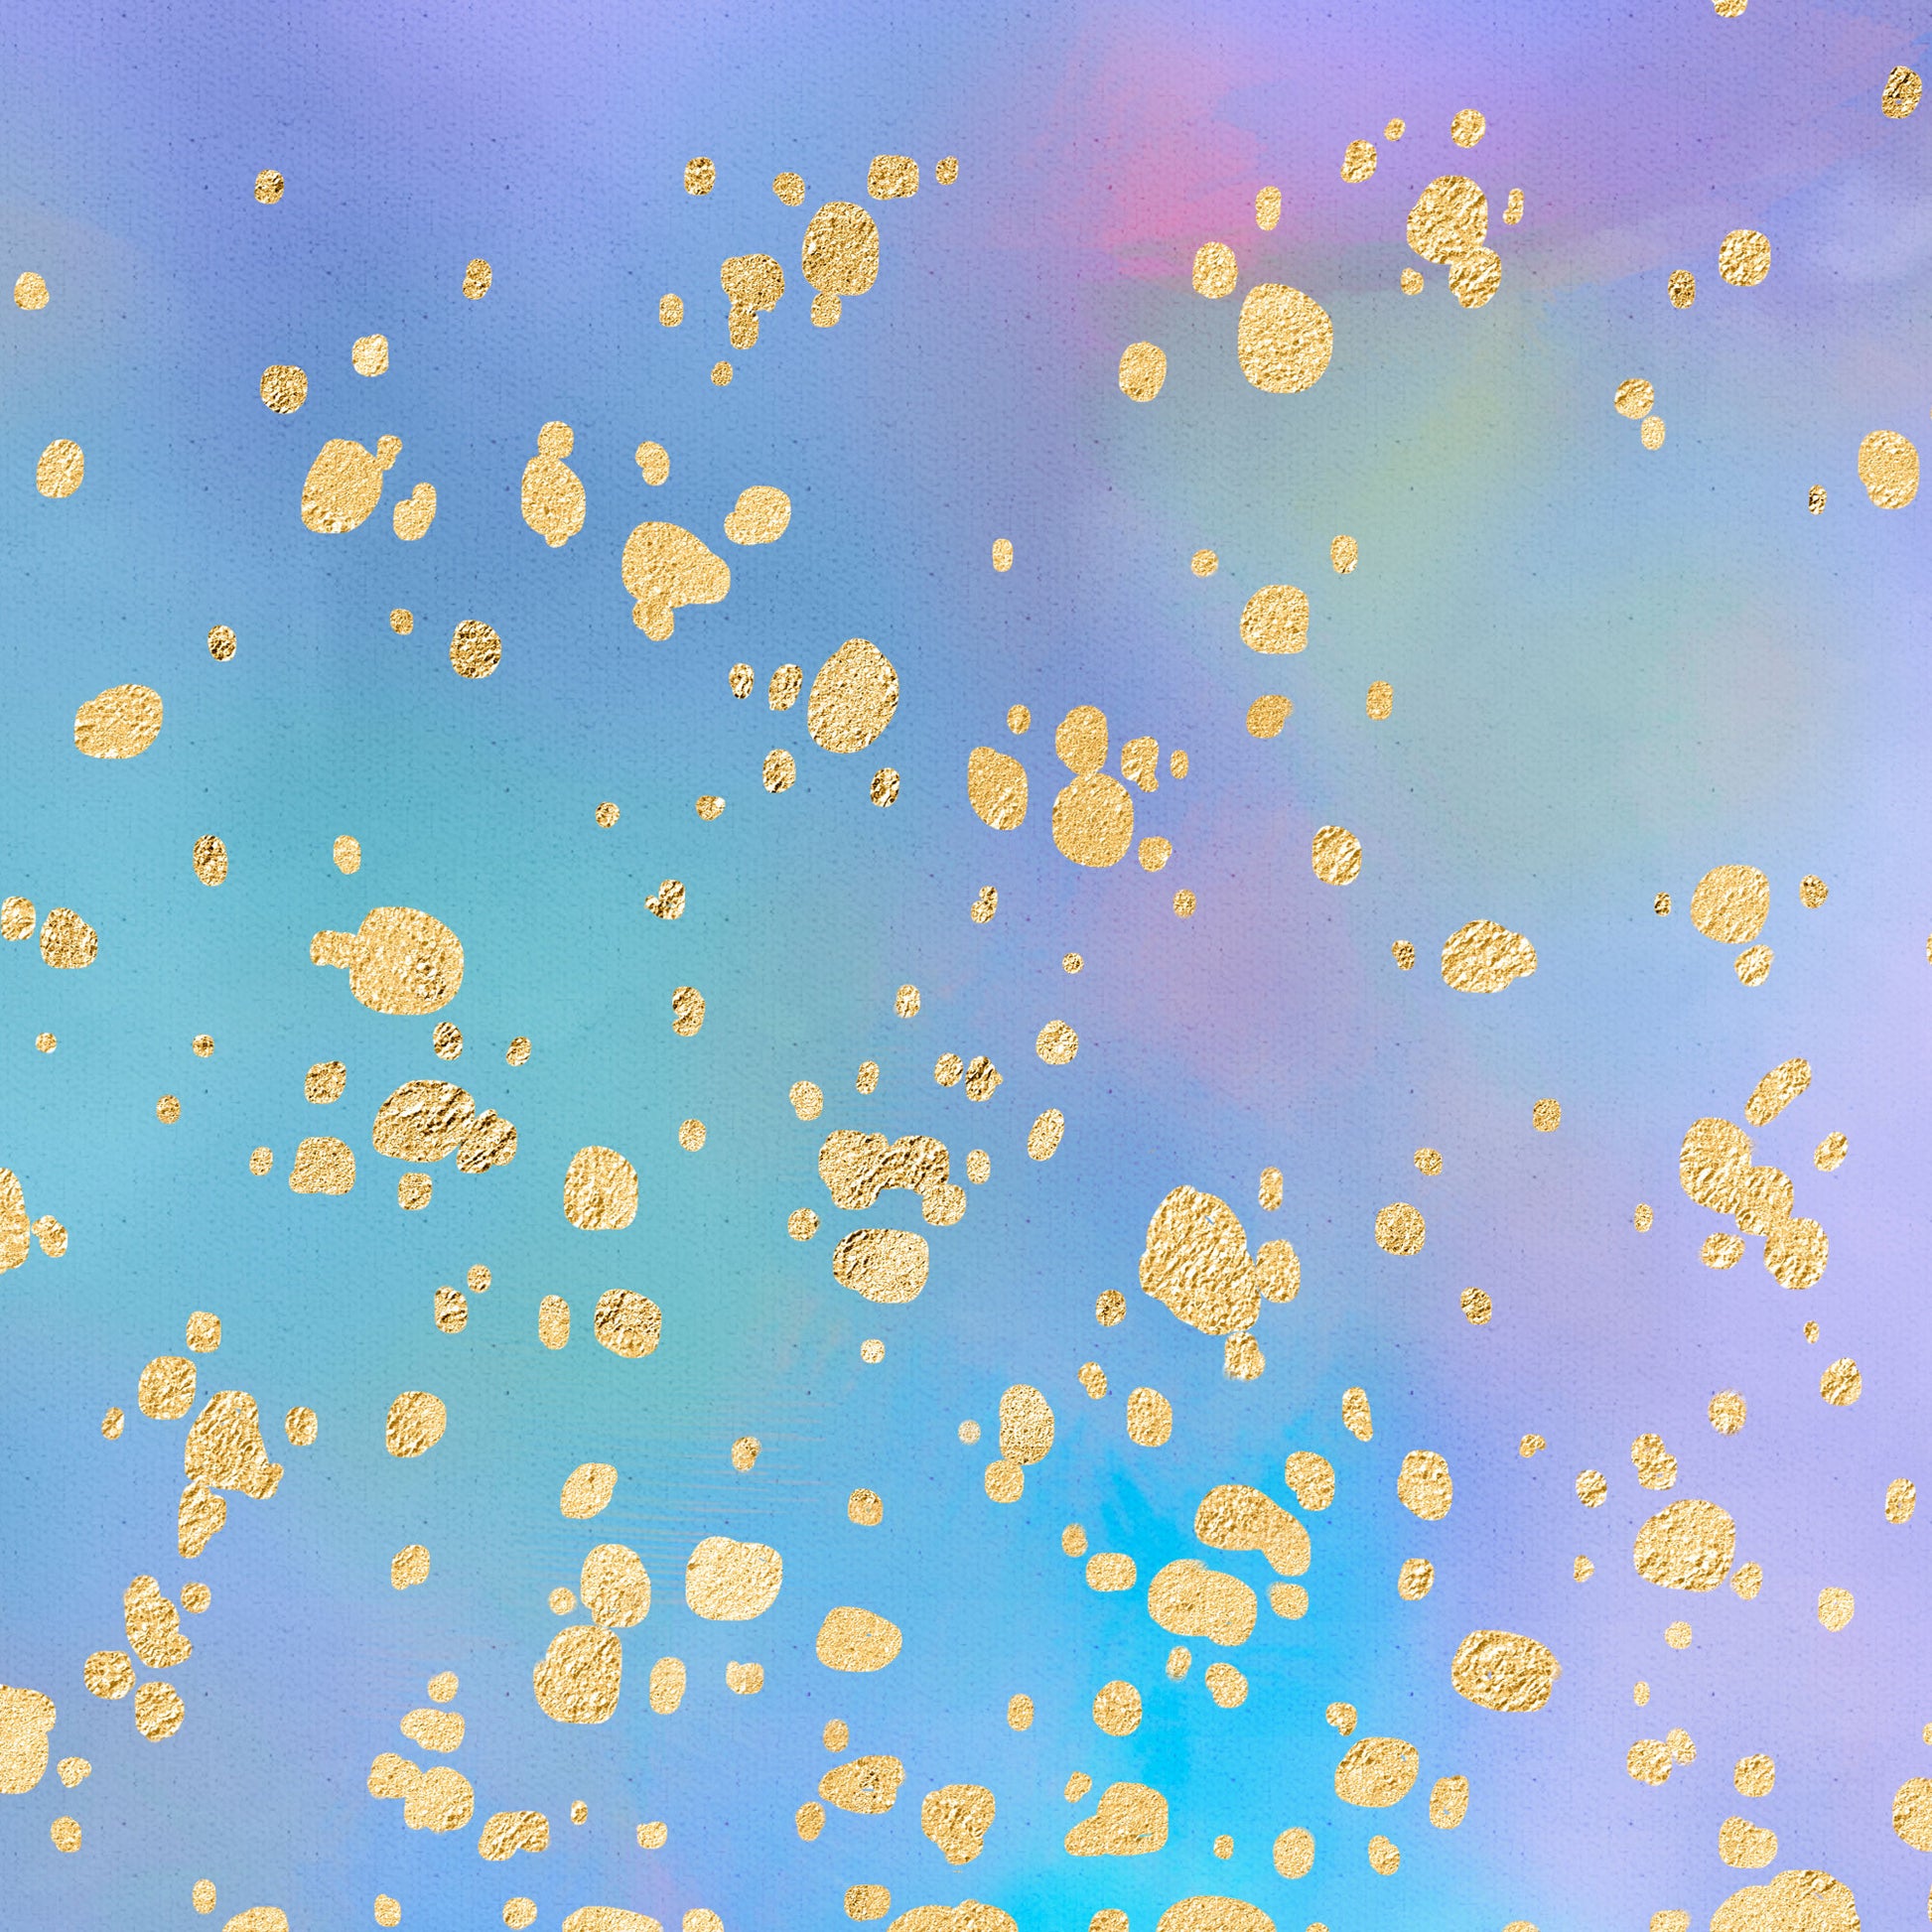 Rainbow Blue and Gold Splatter Up close